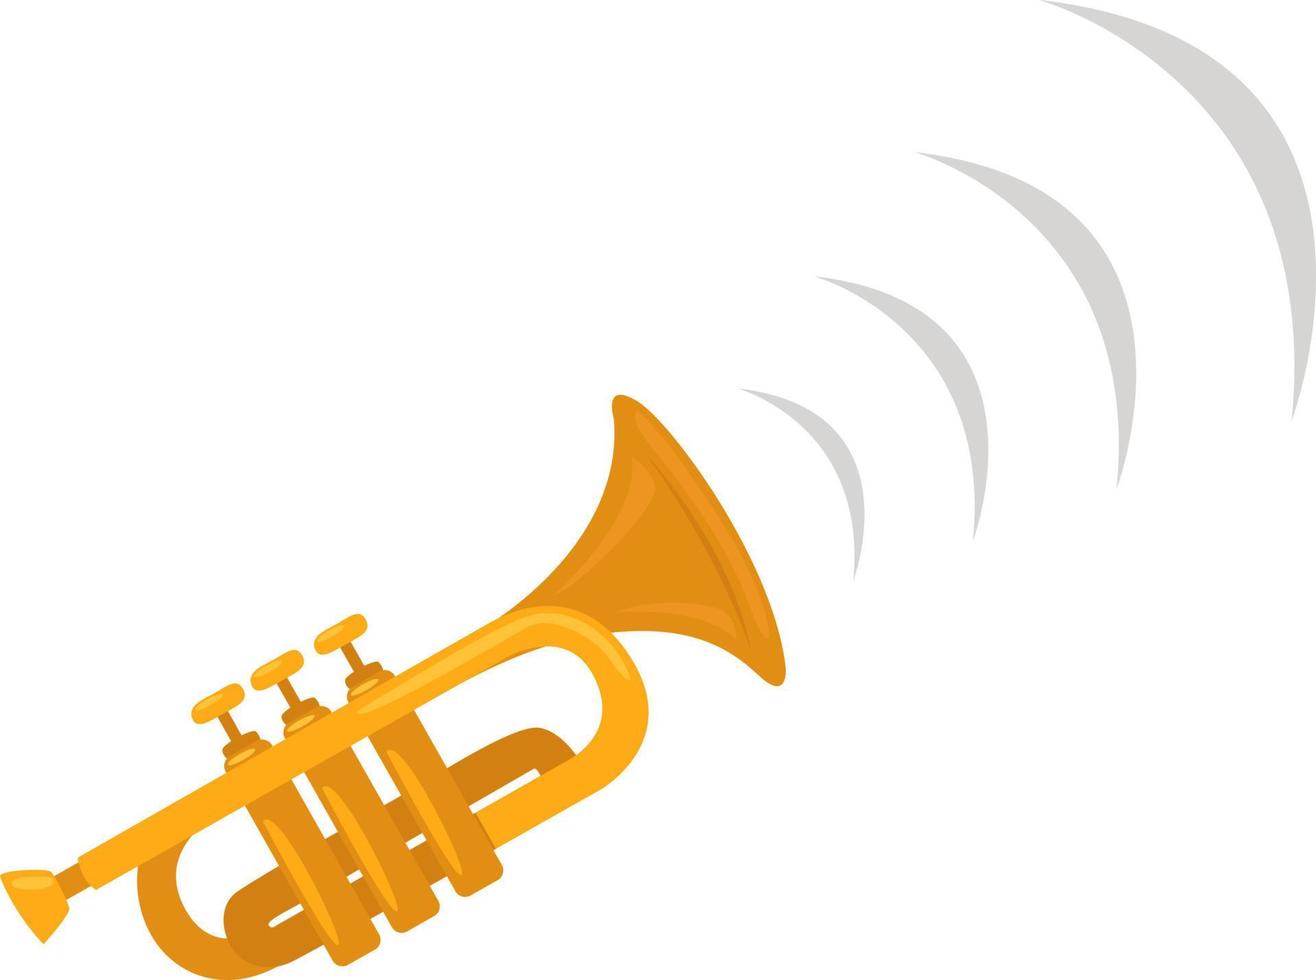 Golden trumpet, illustration, vector on white background